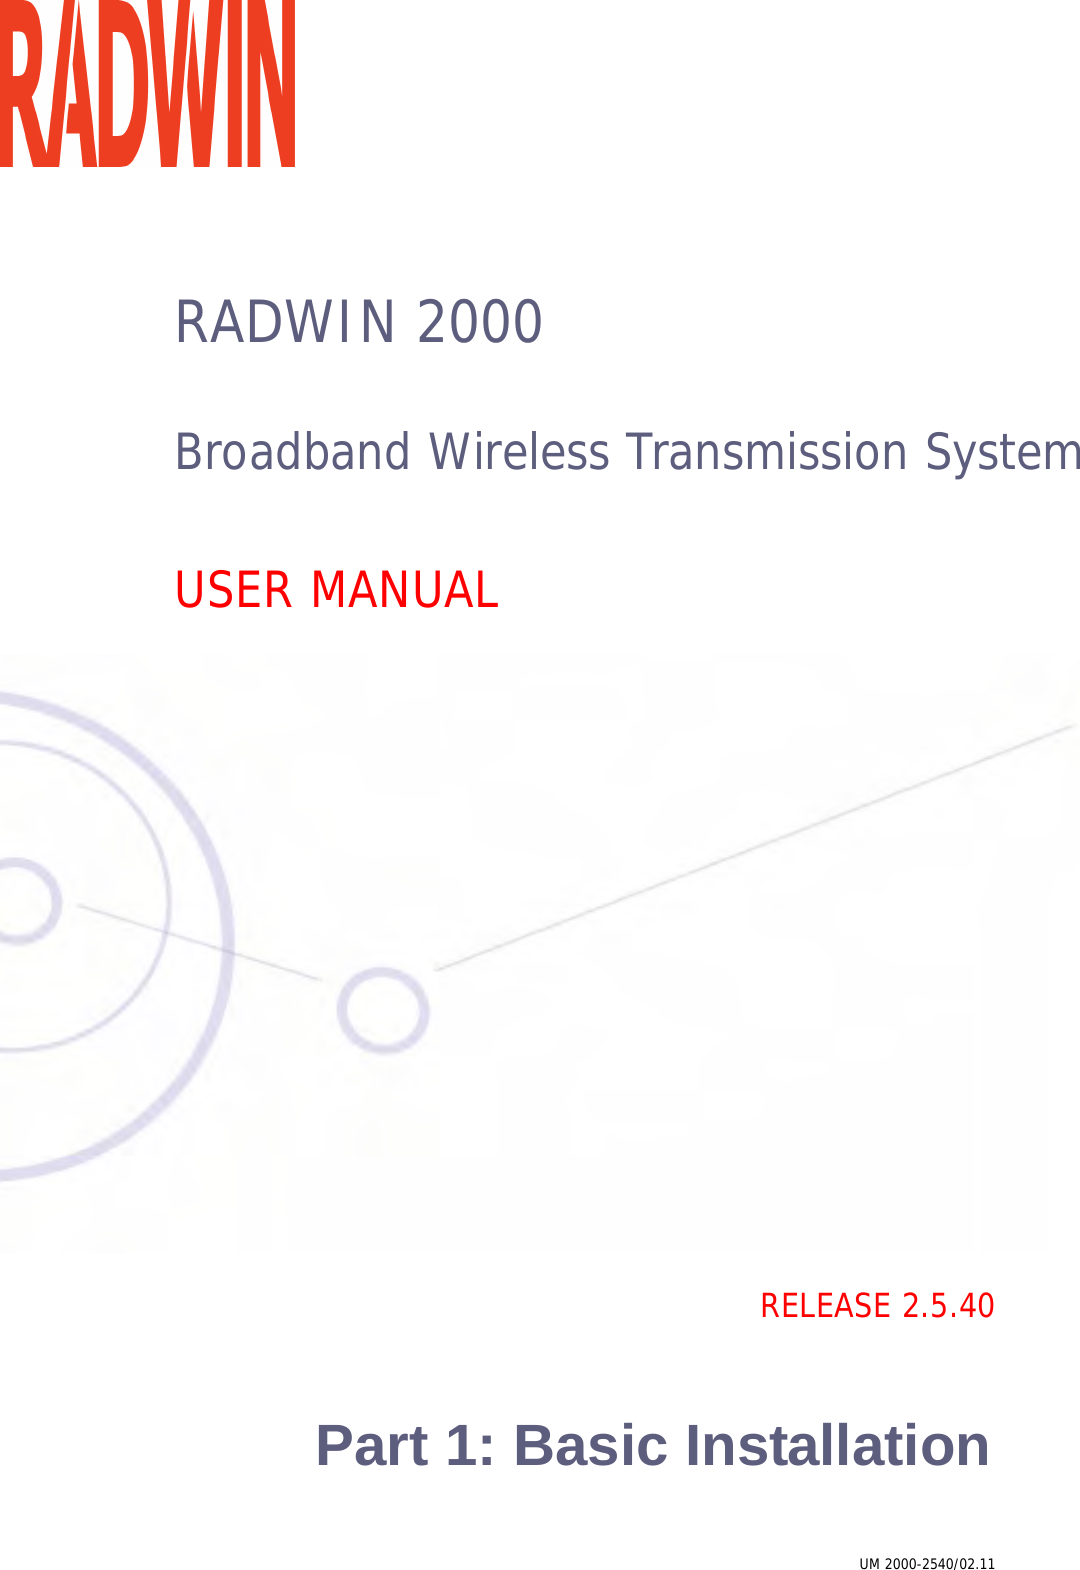 RADWIN 2000Broadband Wireless Transmission SystemUSER MANUALRELEASE 2.5.40Part 1: Basic InstallationUM 2000-2540/02.11